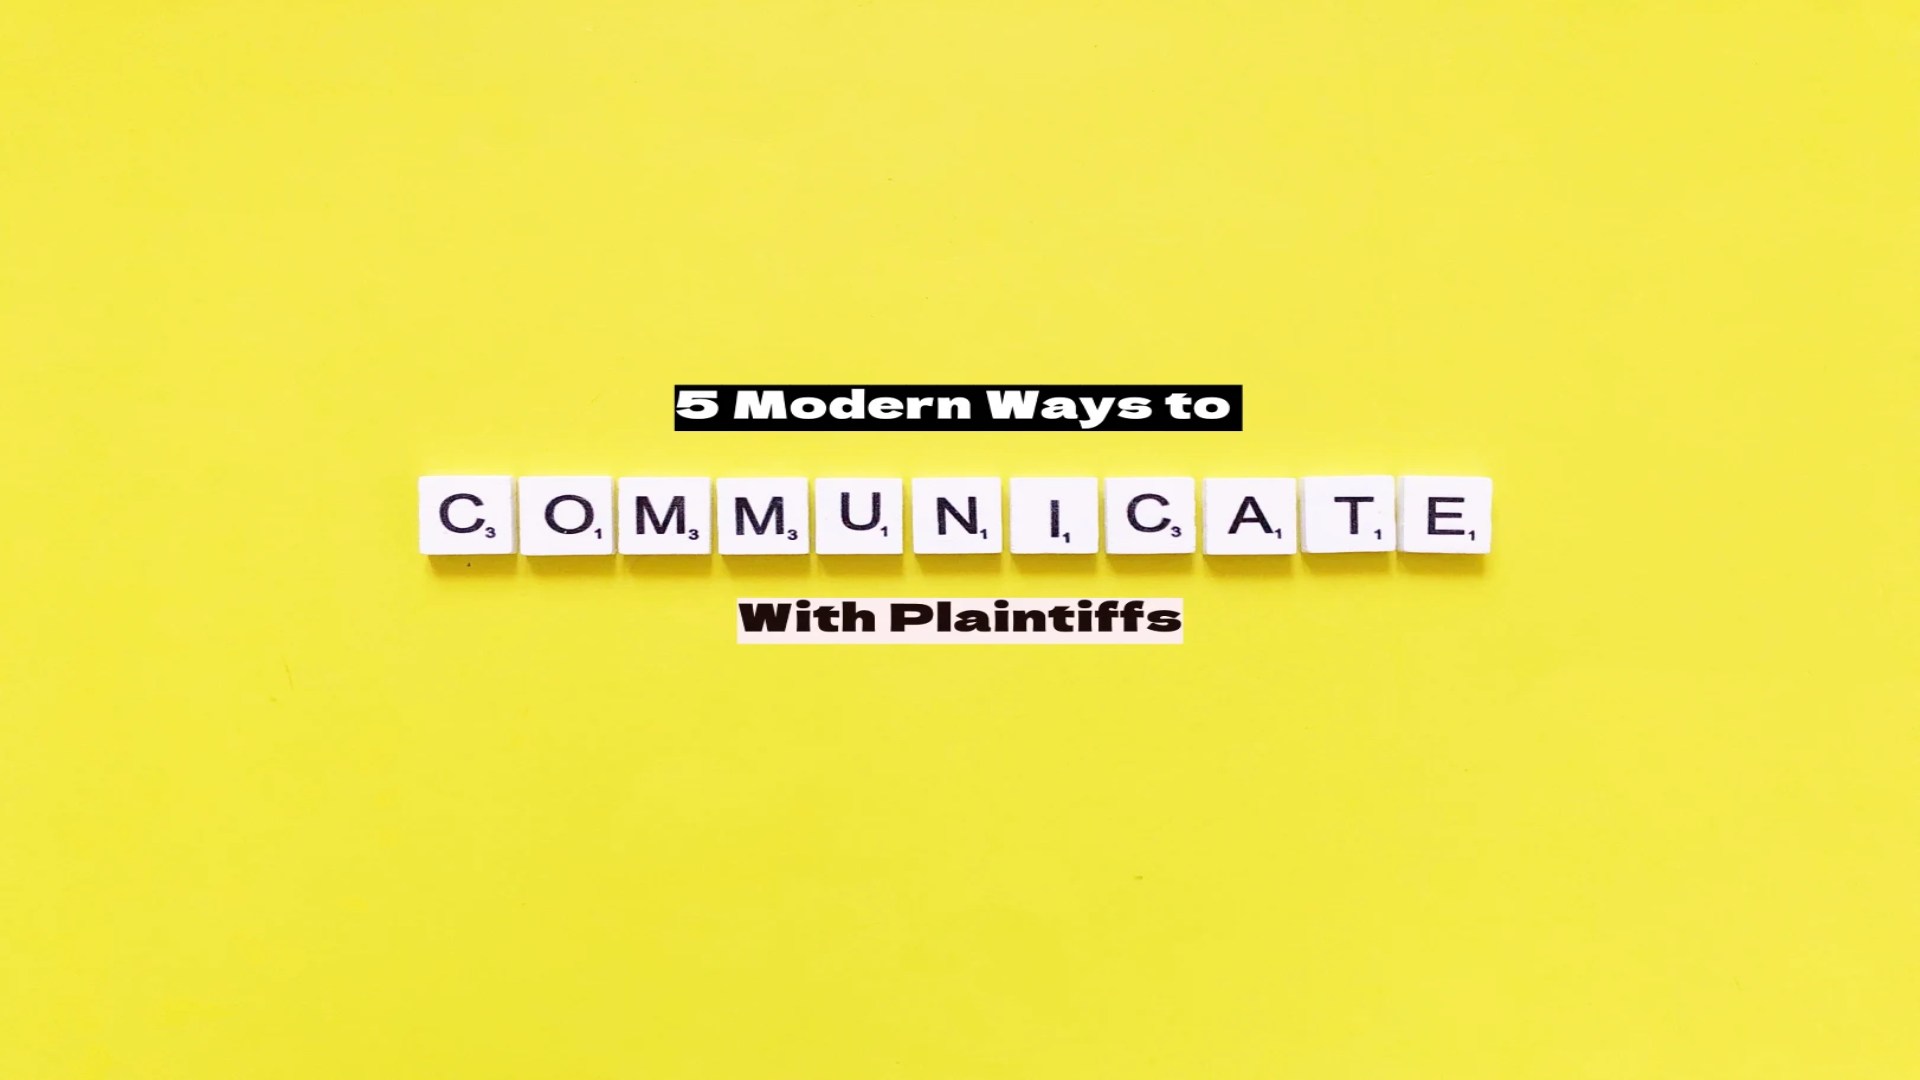 5 Modern Ways to Communicate with your Plaintiffs